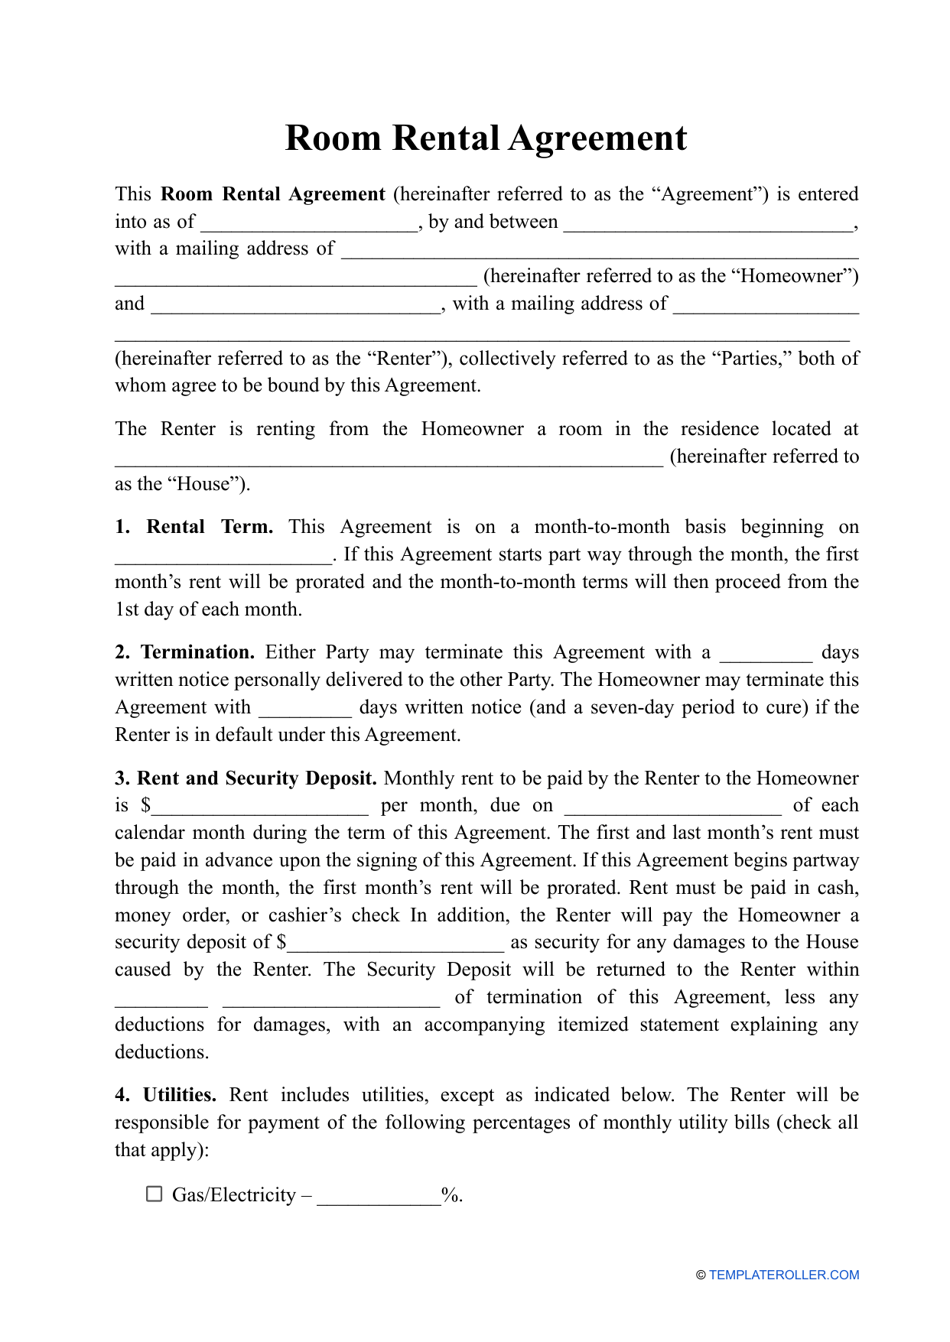 room rental agreement template download printable pdf templateroller